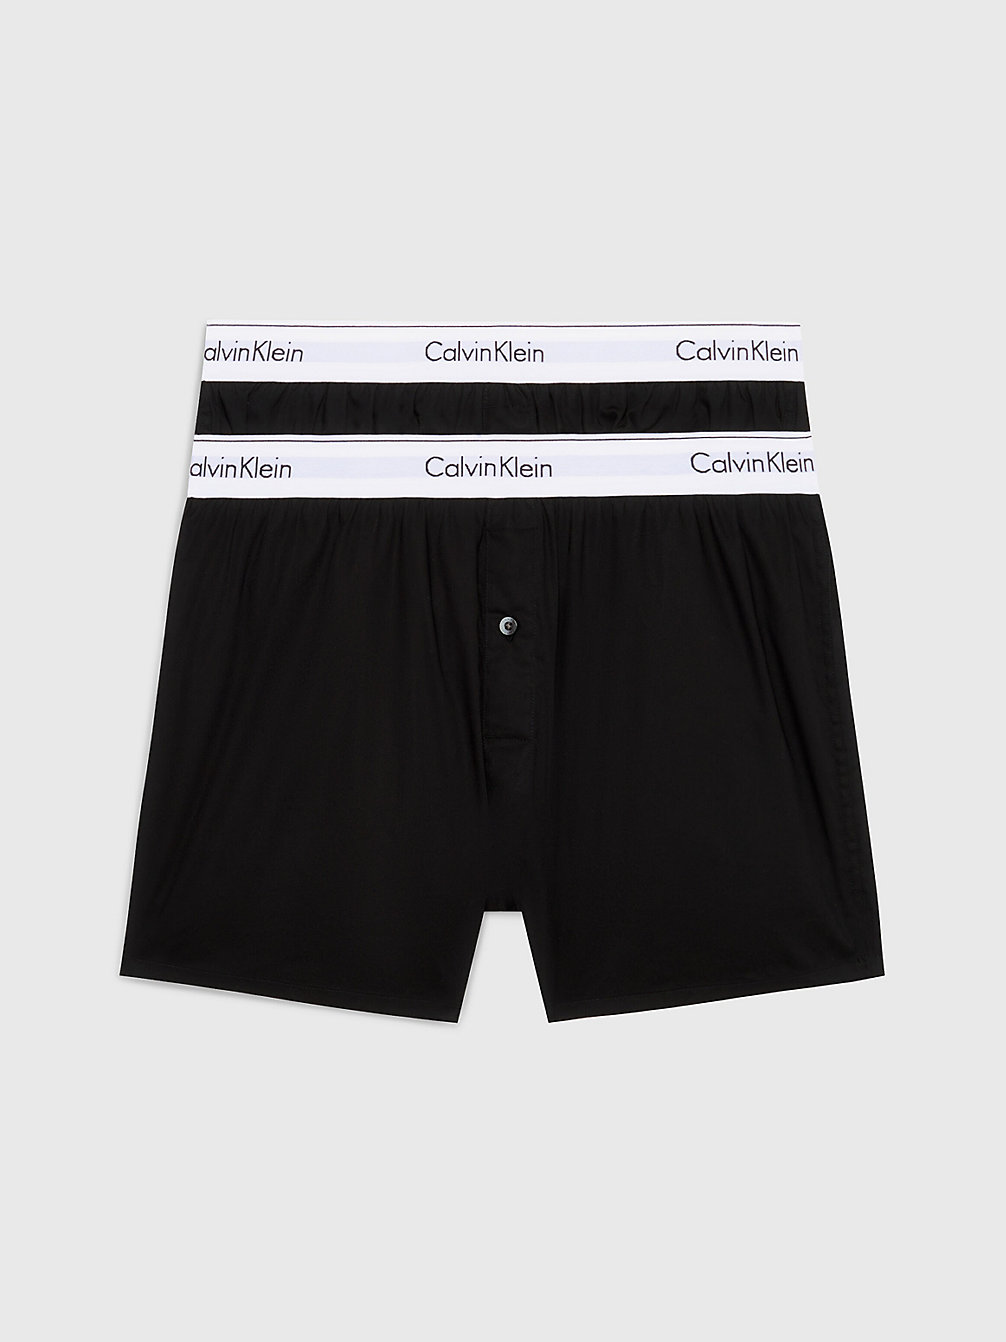 BLACK/ BLACK 2er-Pack Slim Fit Boxershorts - Modern Cotton undefined Herren Calvin Klein